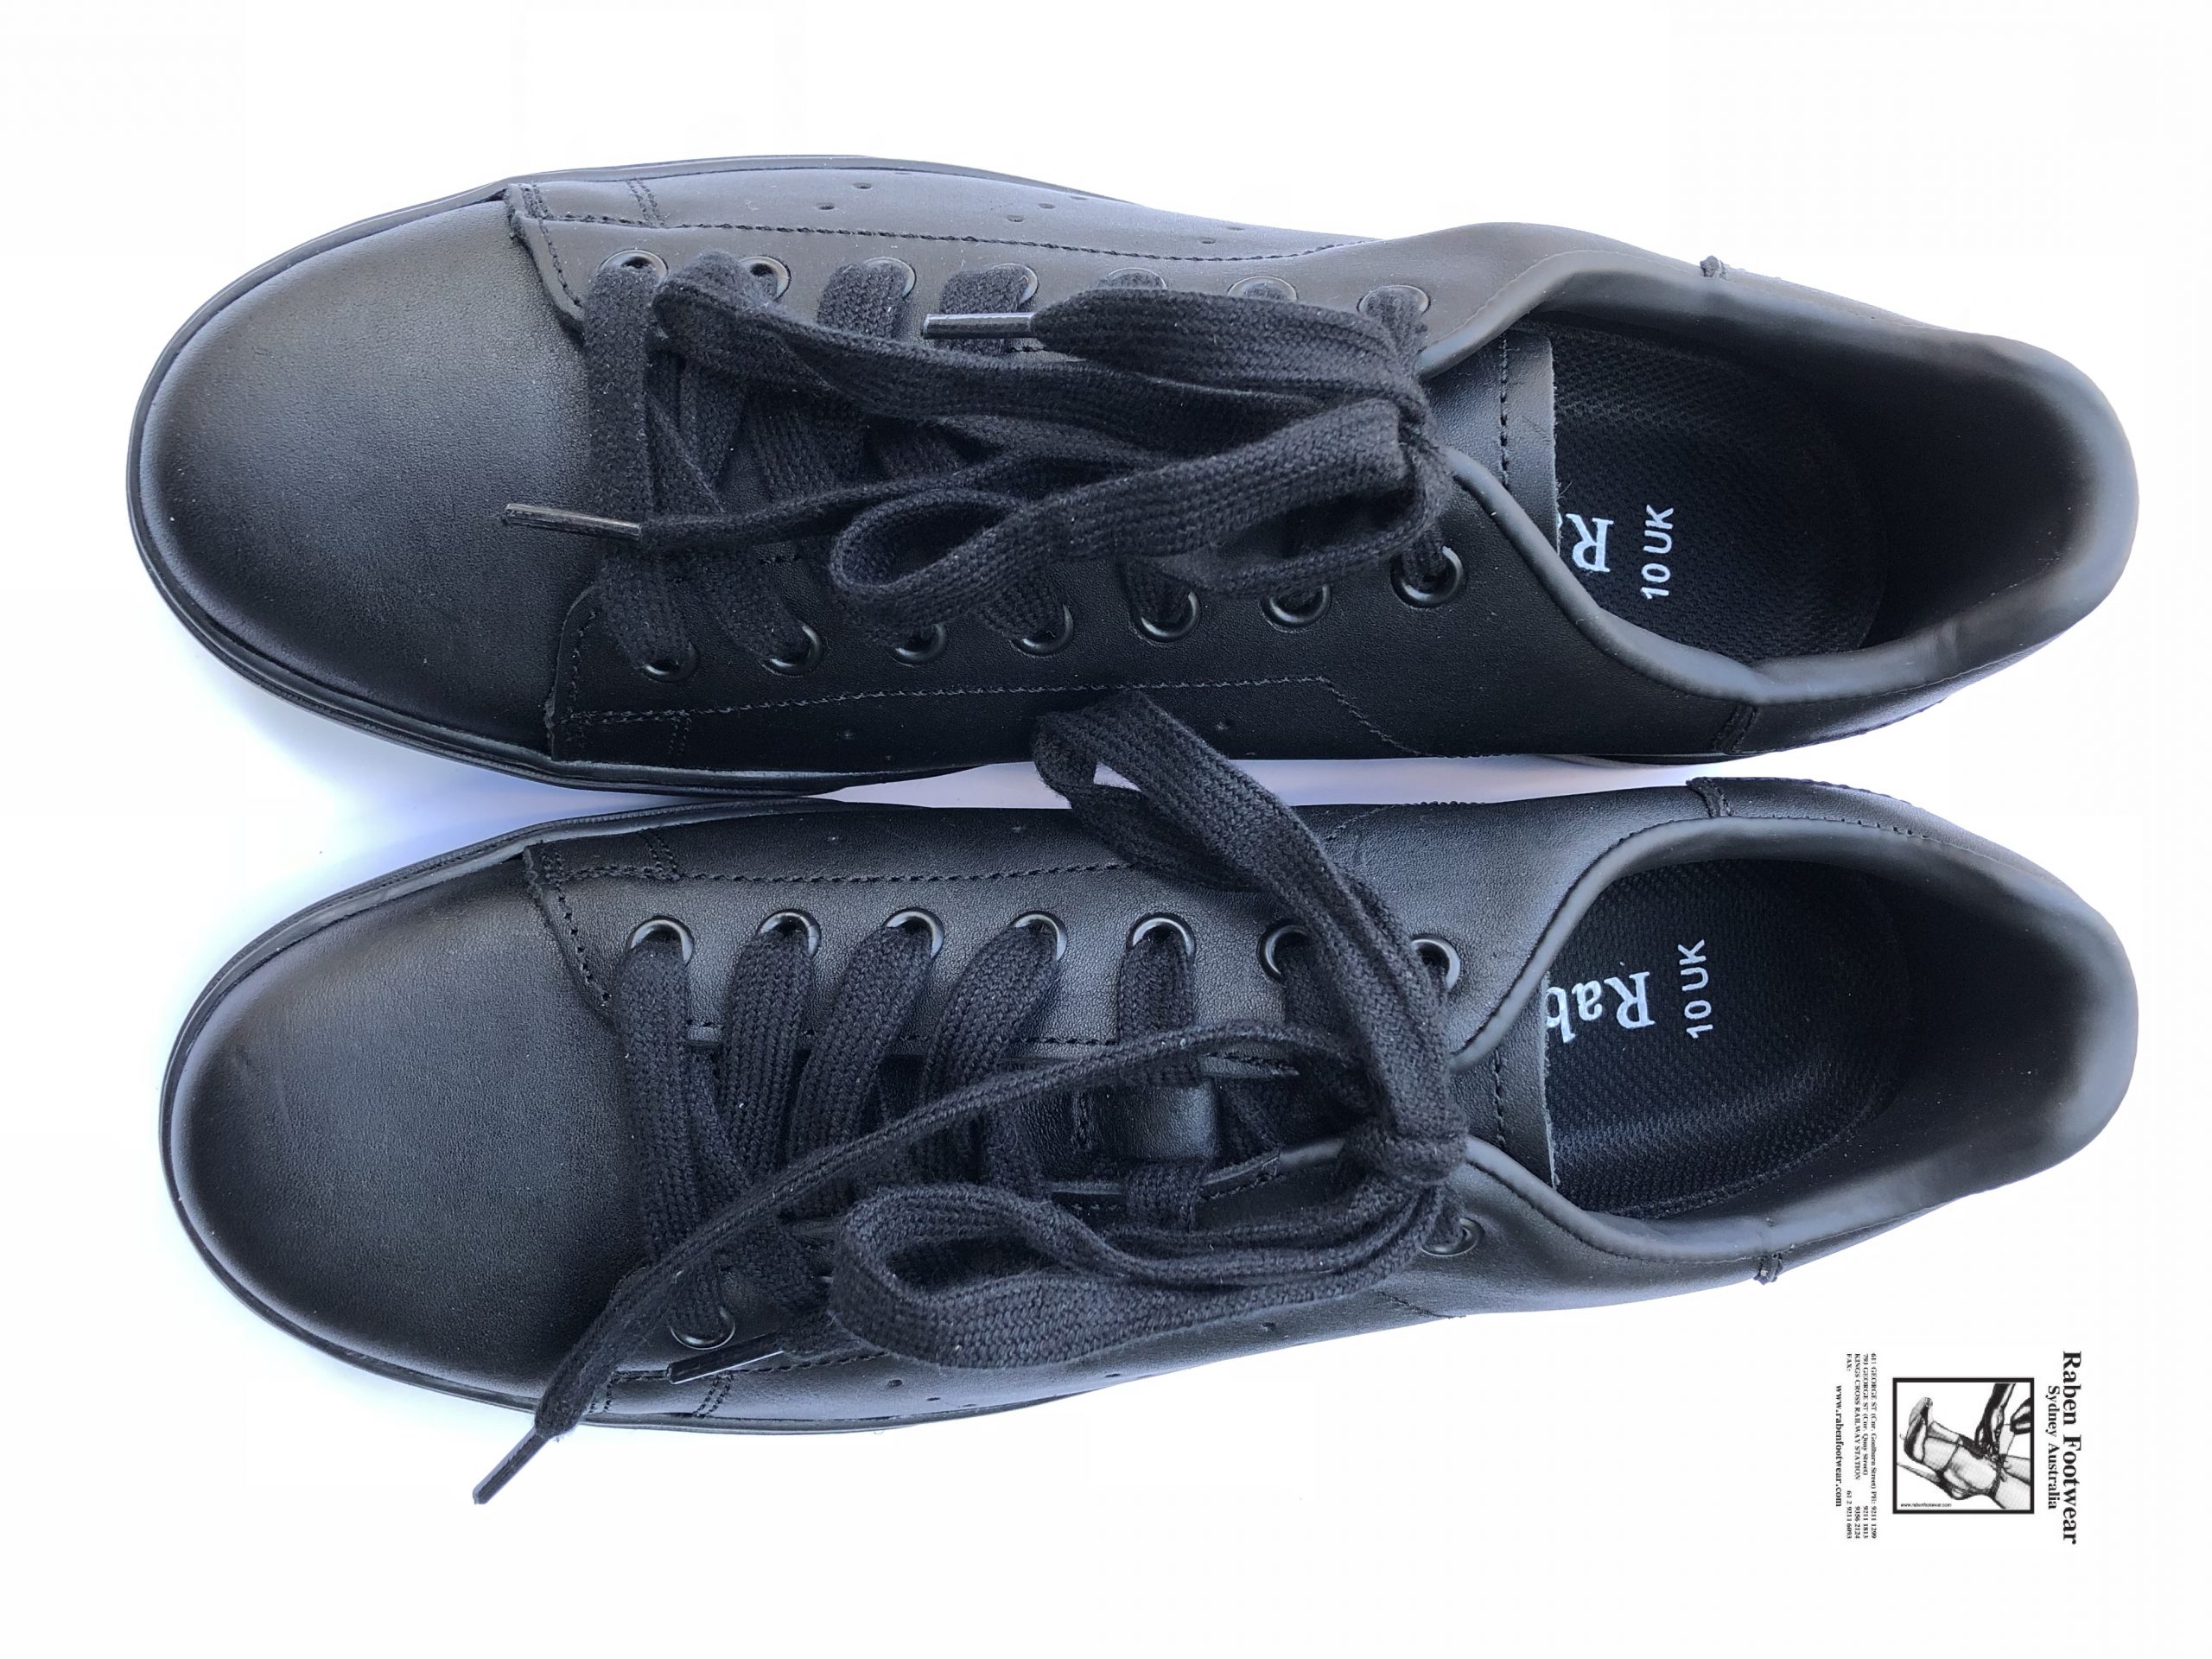 Raben Premium Leather Lace up Sneakers in Black - Raben Footwear